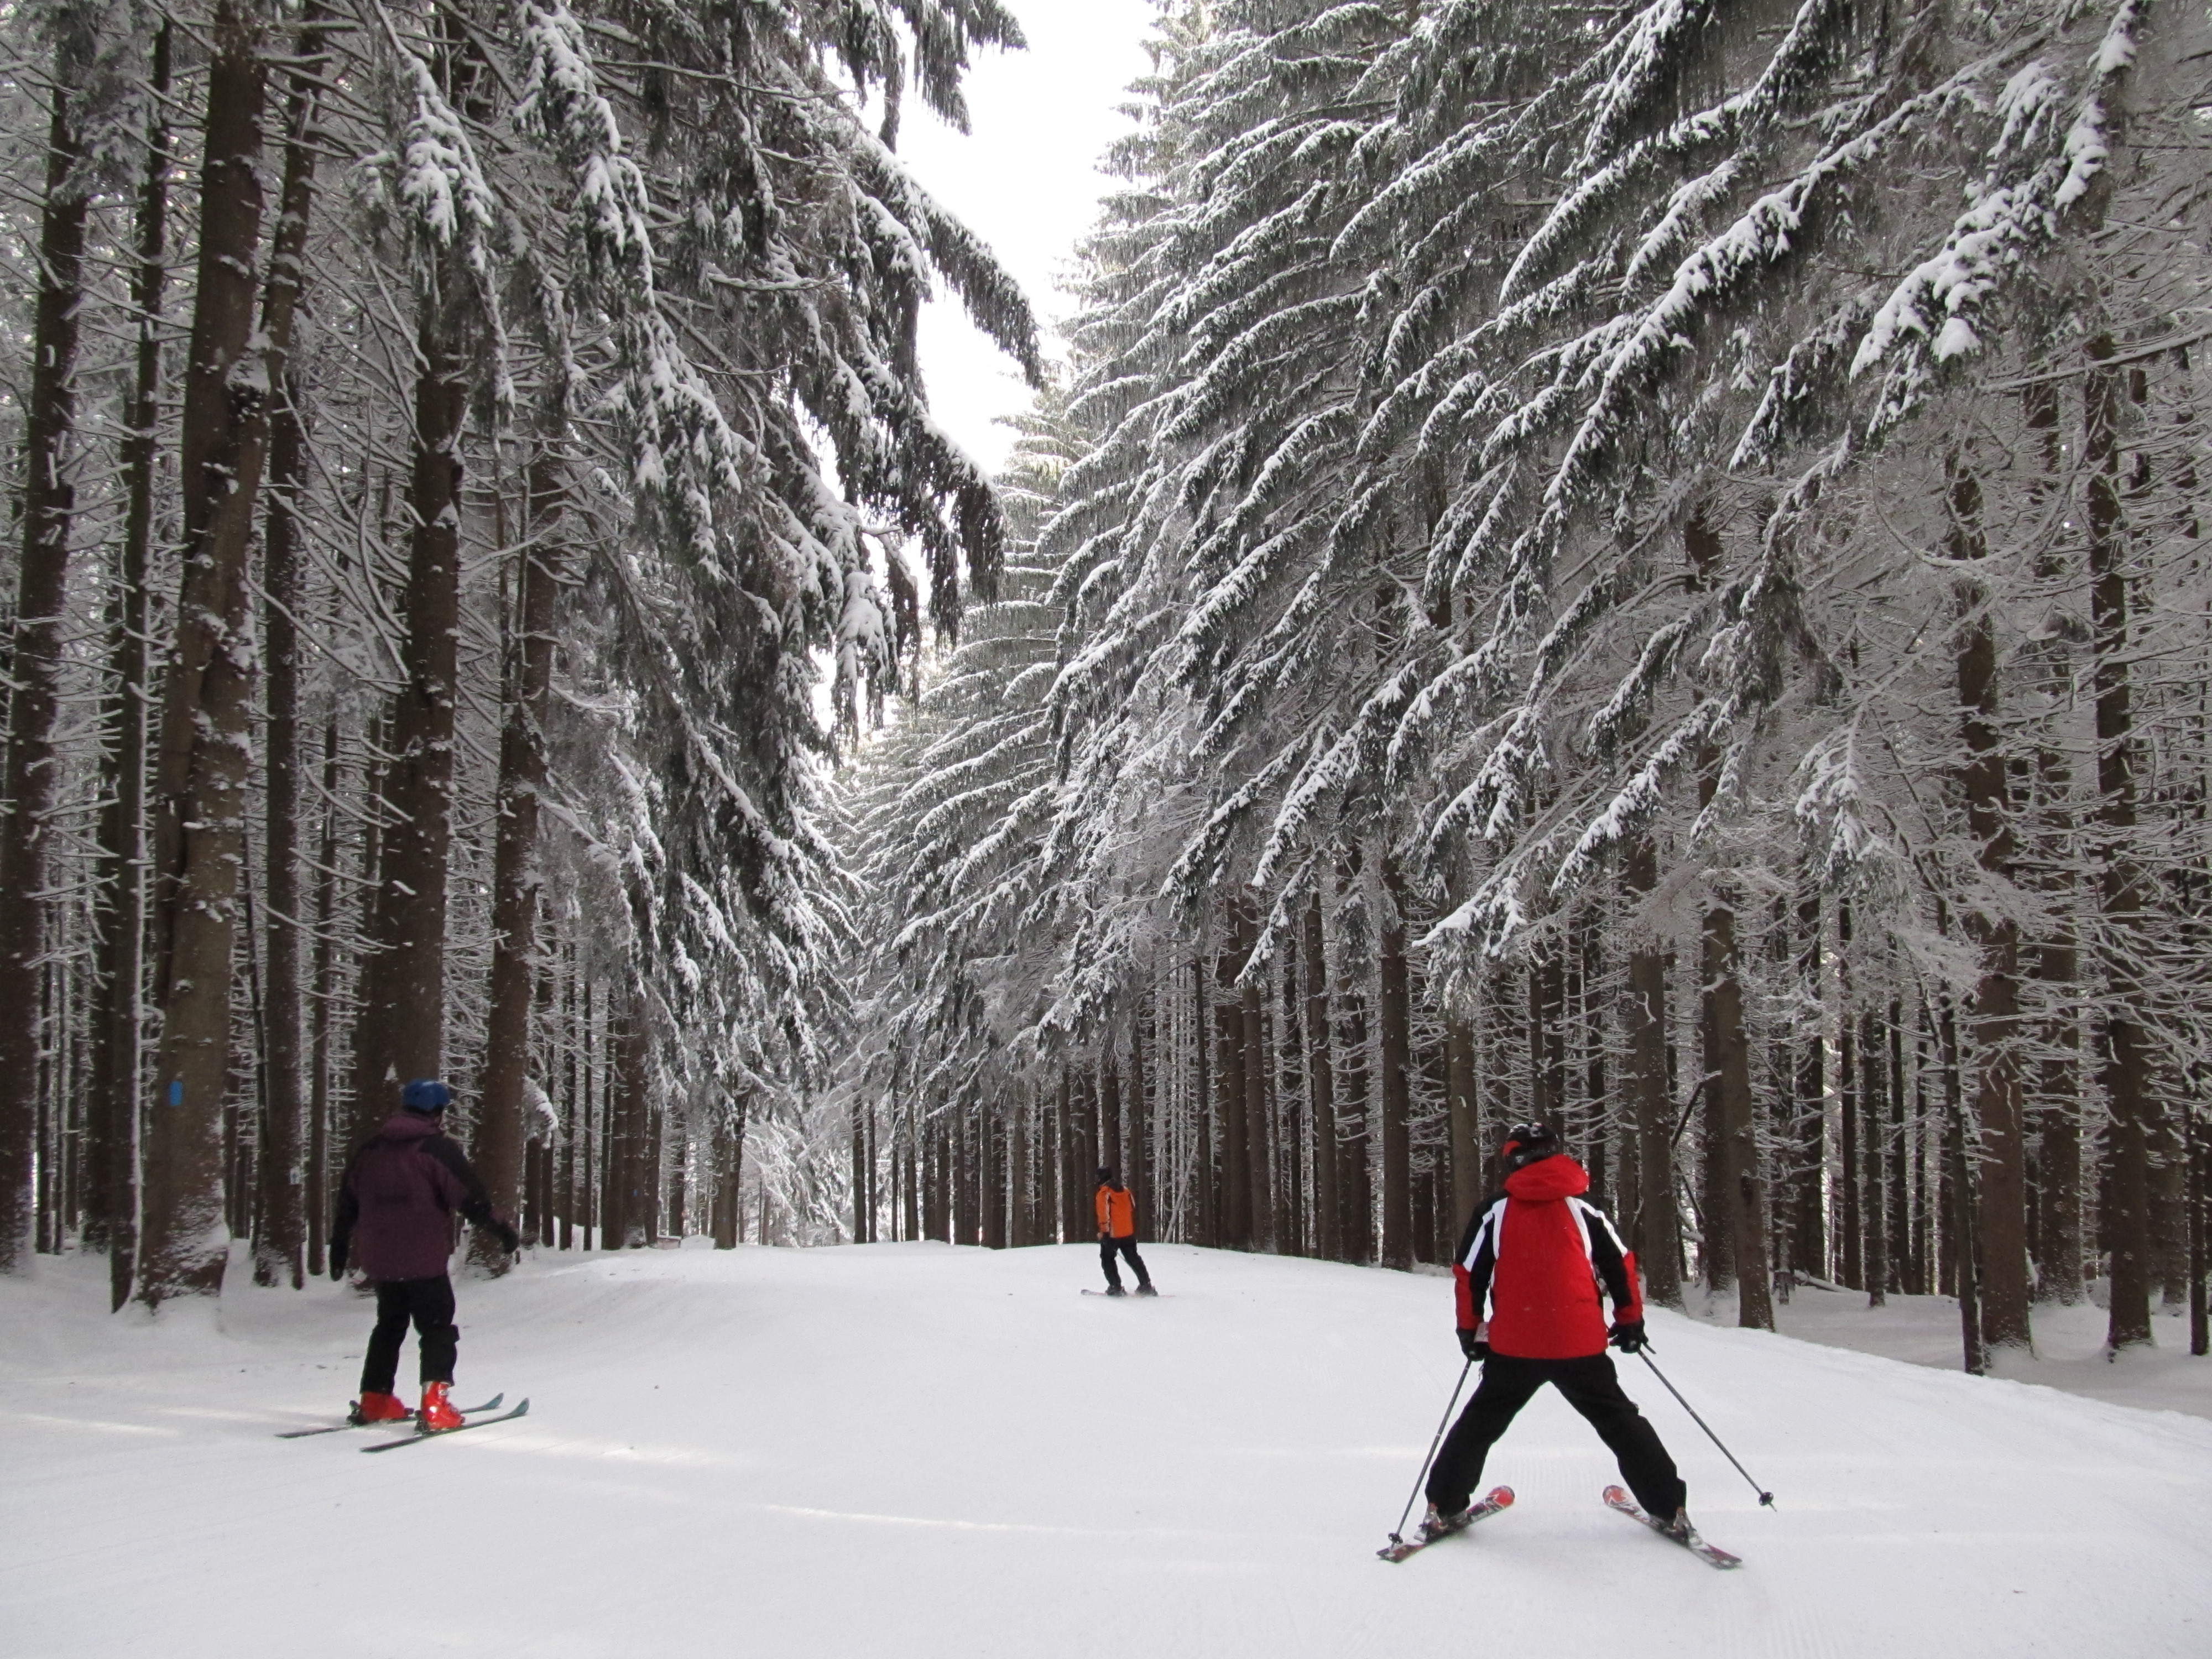 3 people skiing through trees 